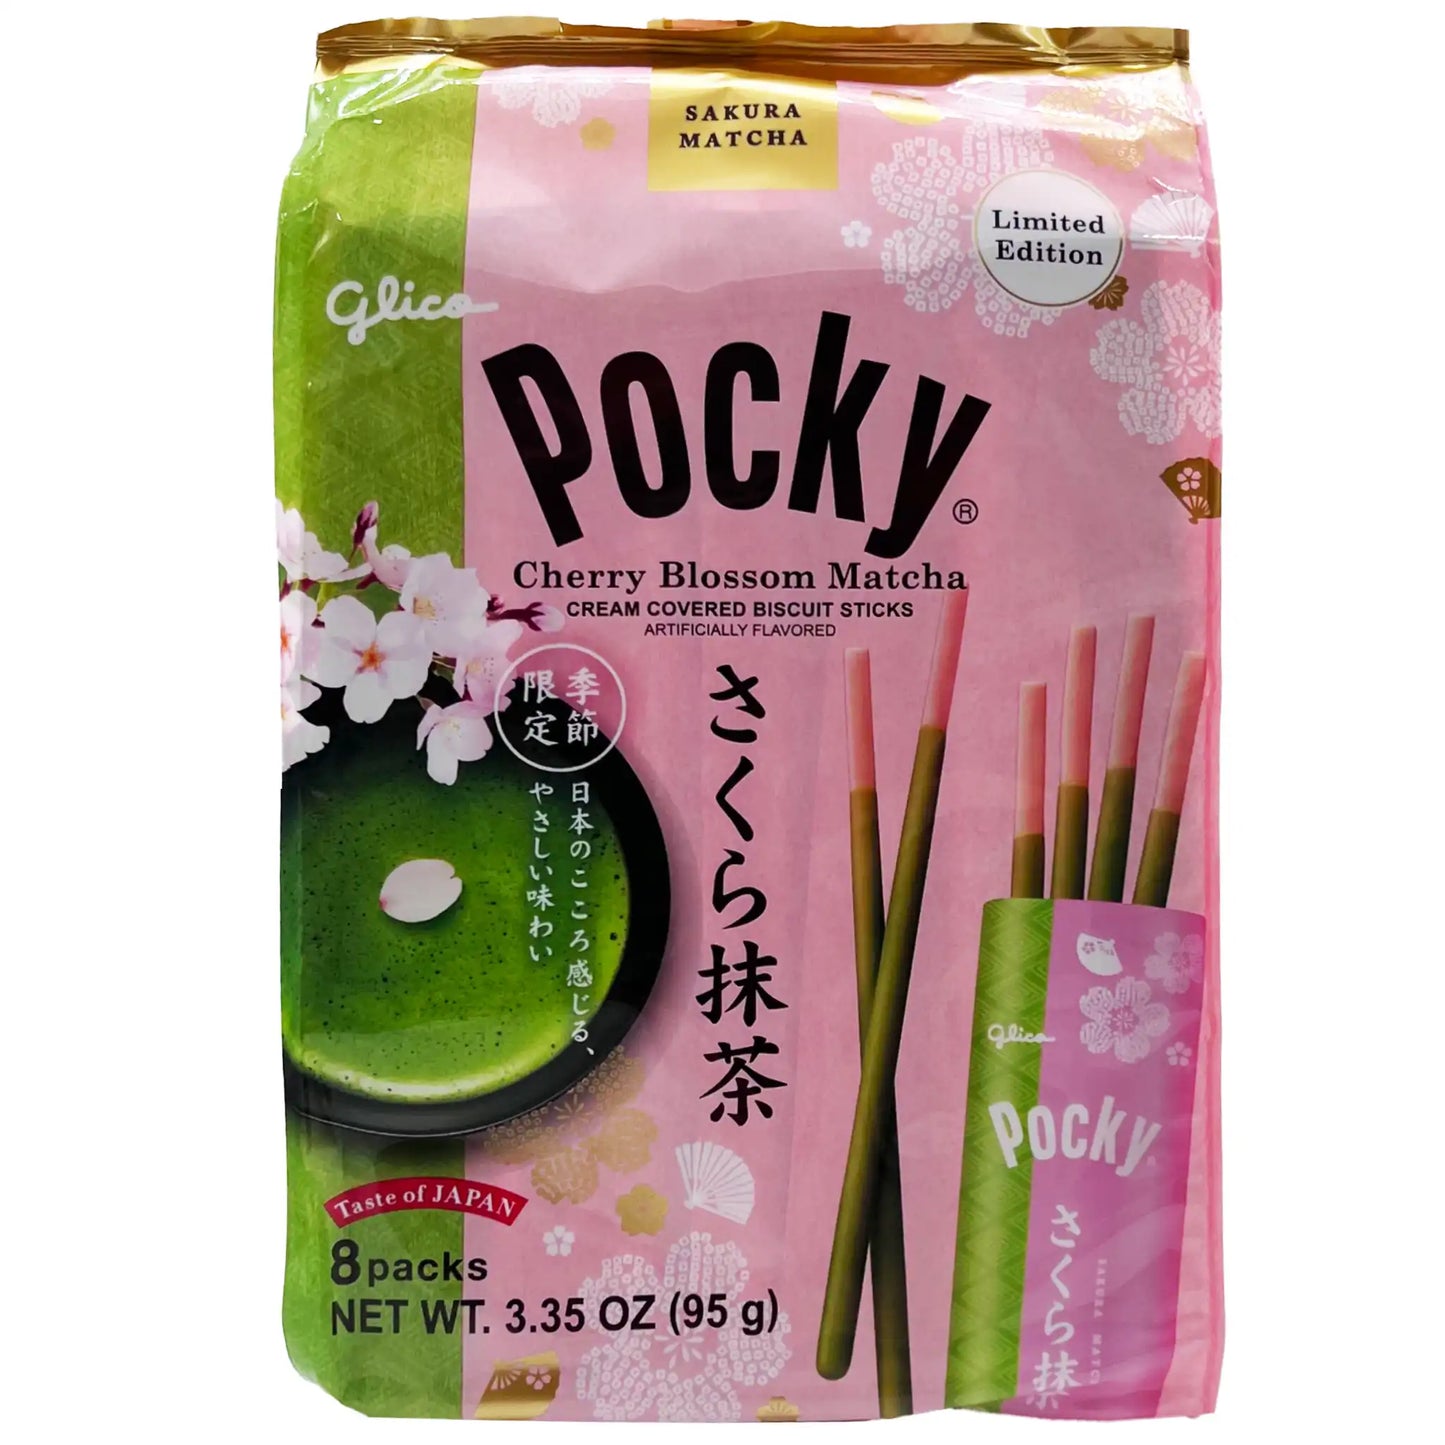 Glico Pocky Sakura Cherry Blossom Matcha Biscuit Sticks Limited Edition 3.35 oz